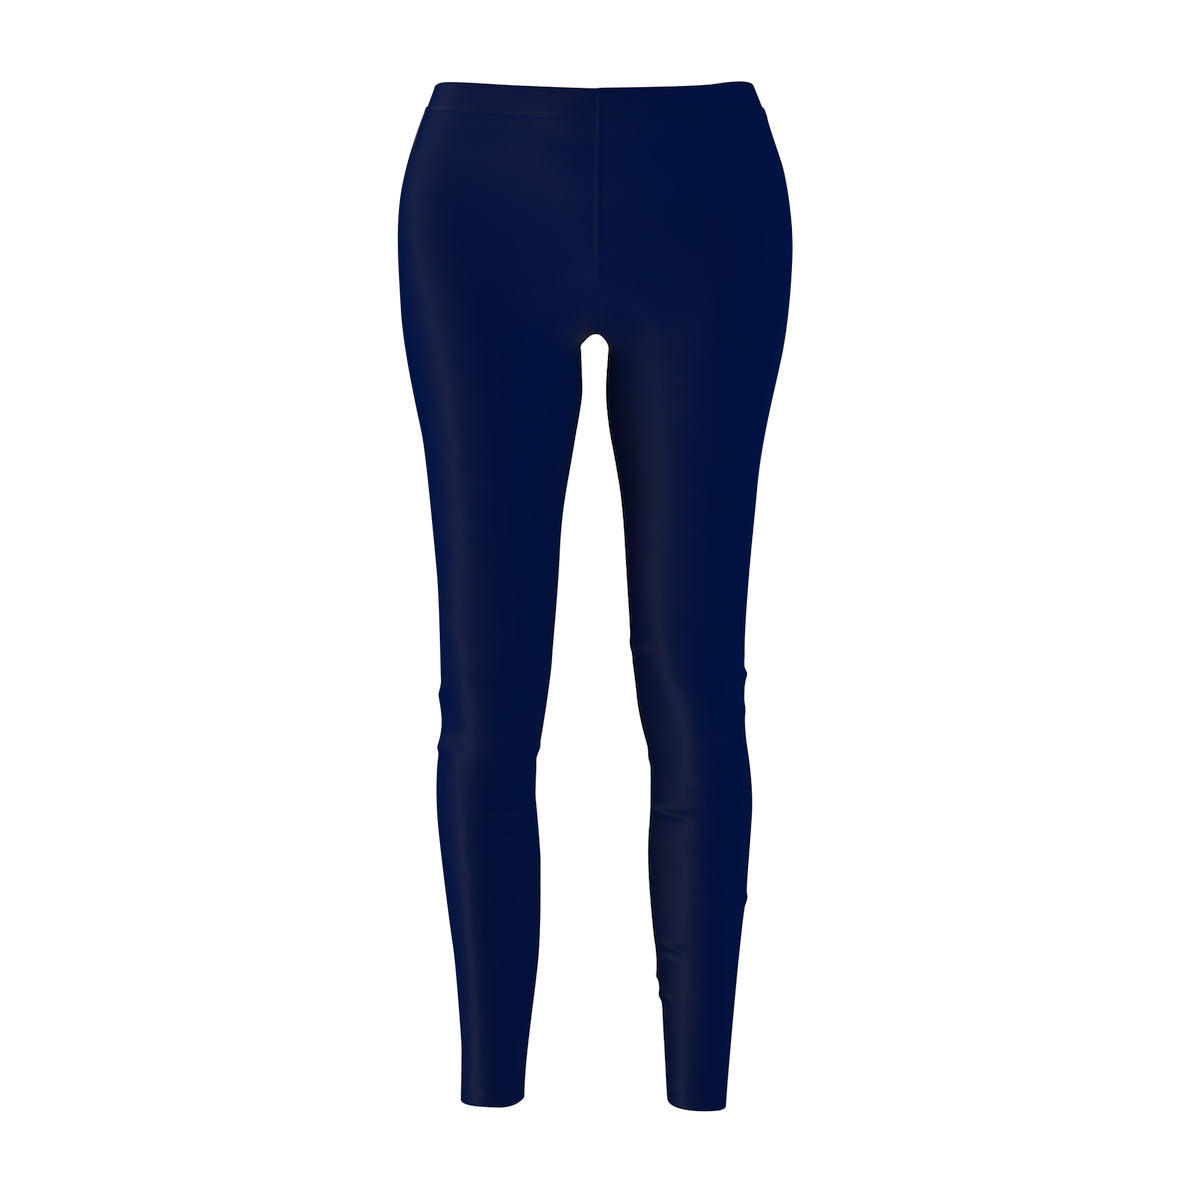 Navy Blue Classic Solid Color Women's Casual Leggings- Made in USA (US Size: XS-2XL)-Casual Leggings-M-Heidi Kimura Art LLC